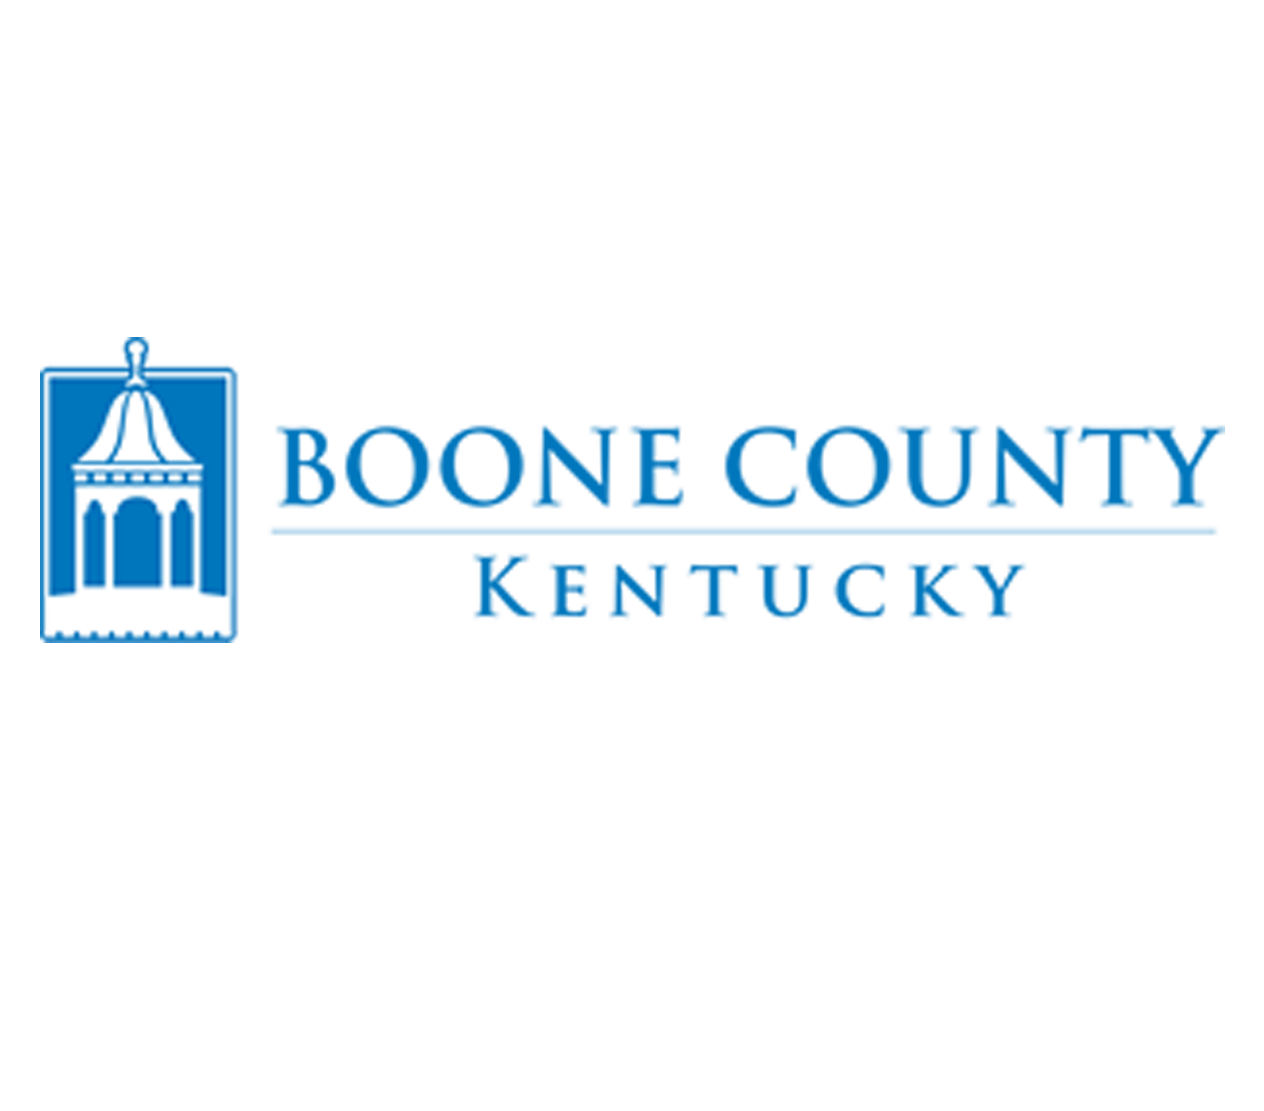 Boone County logo